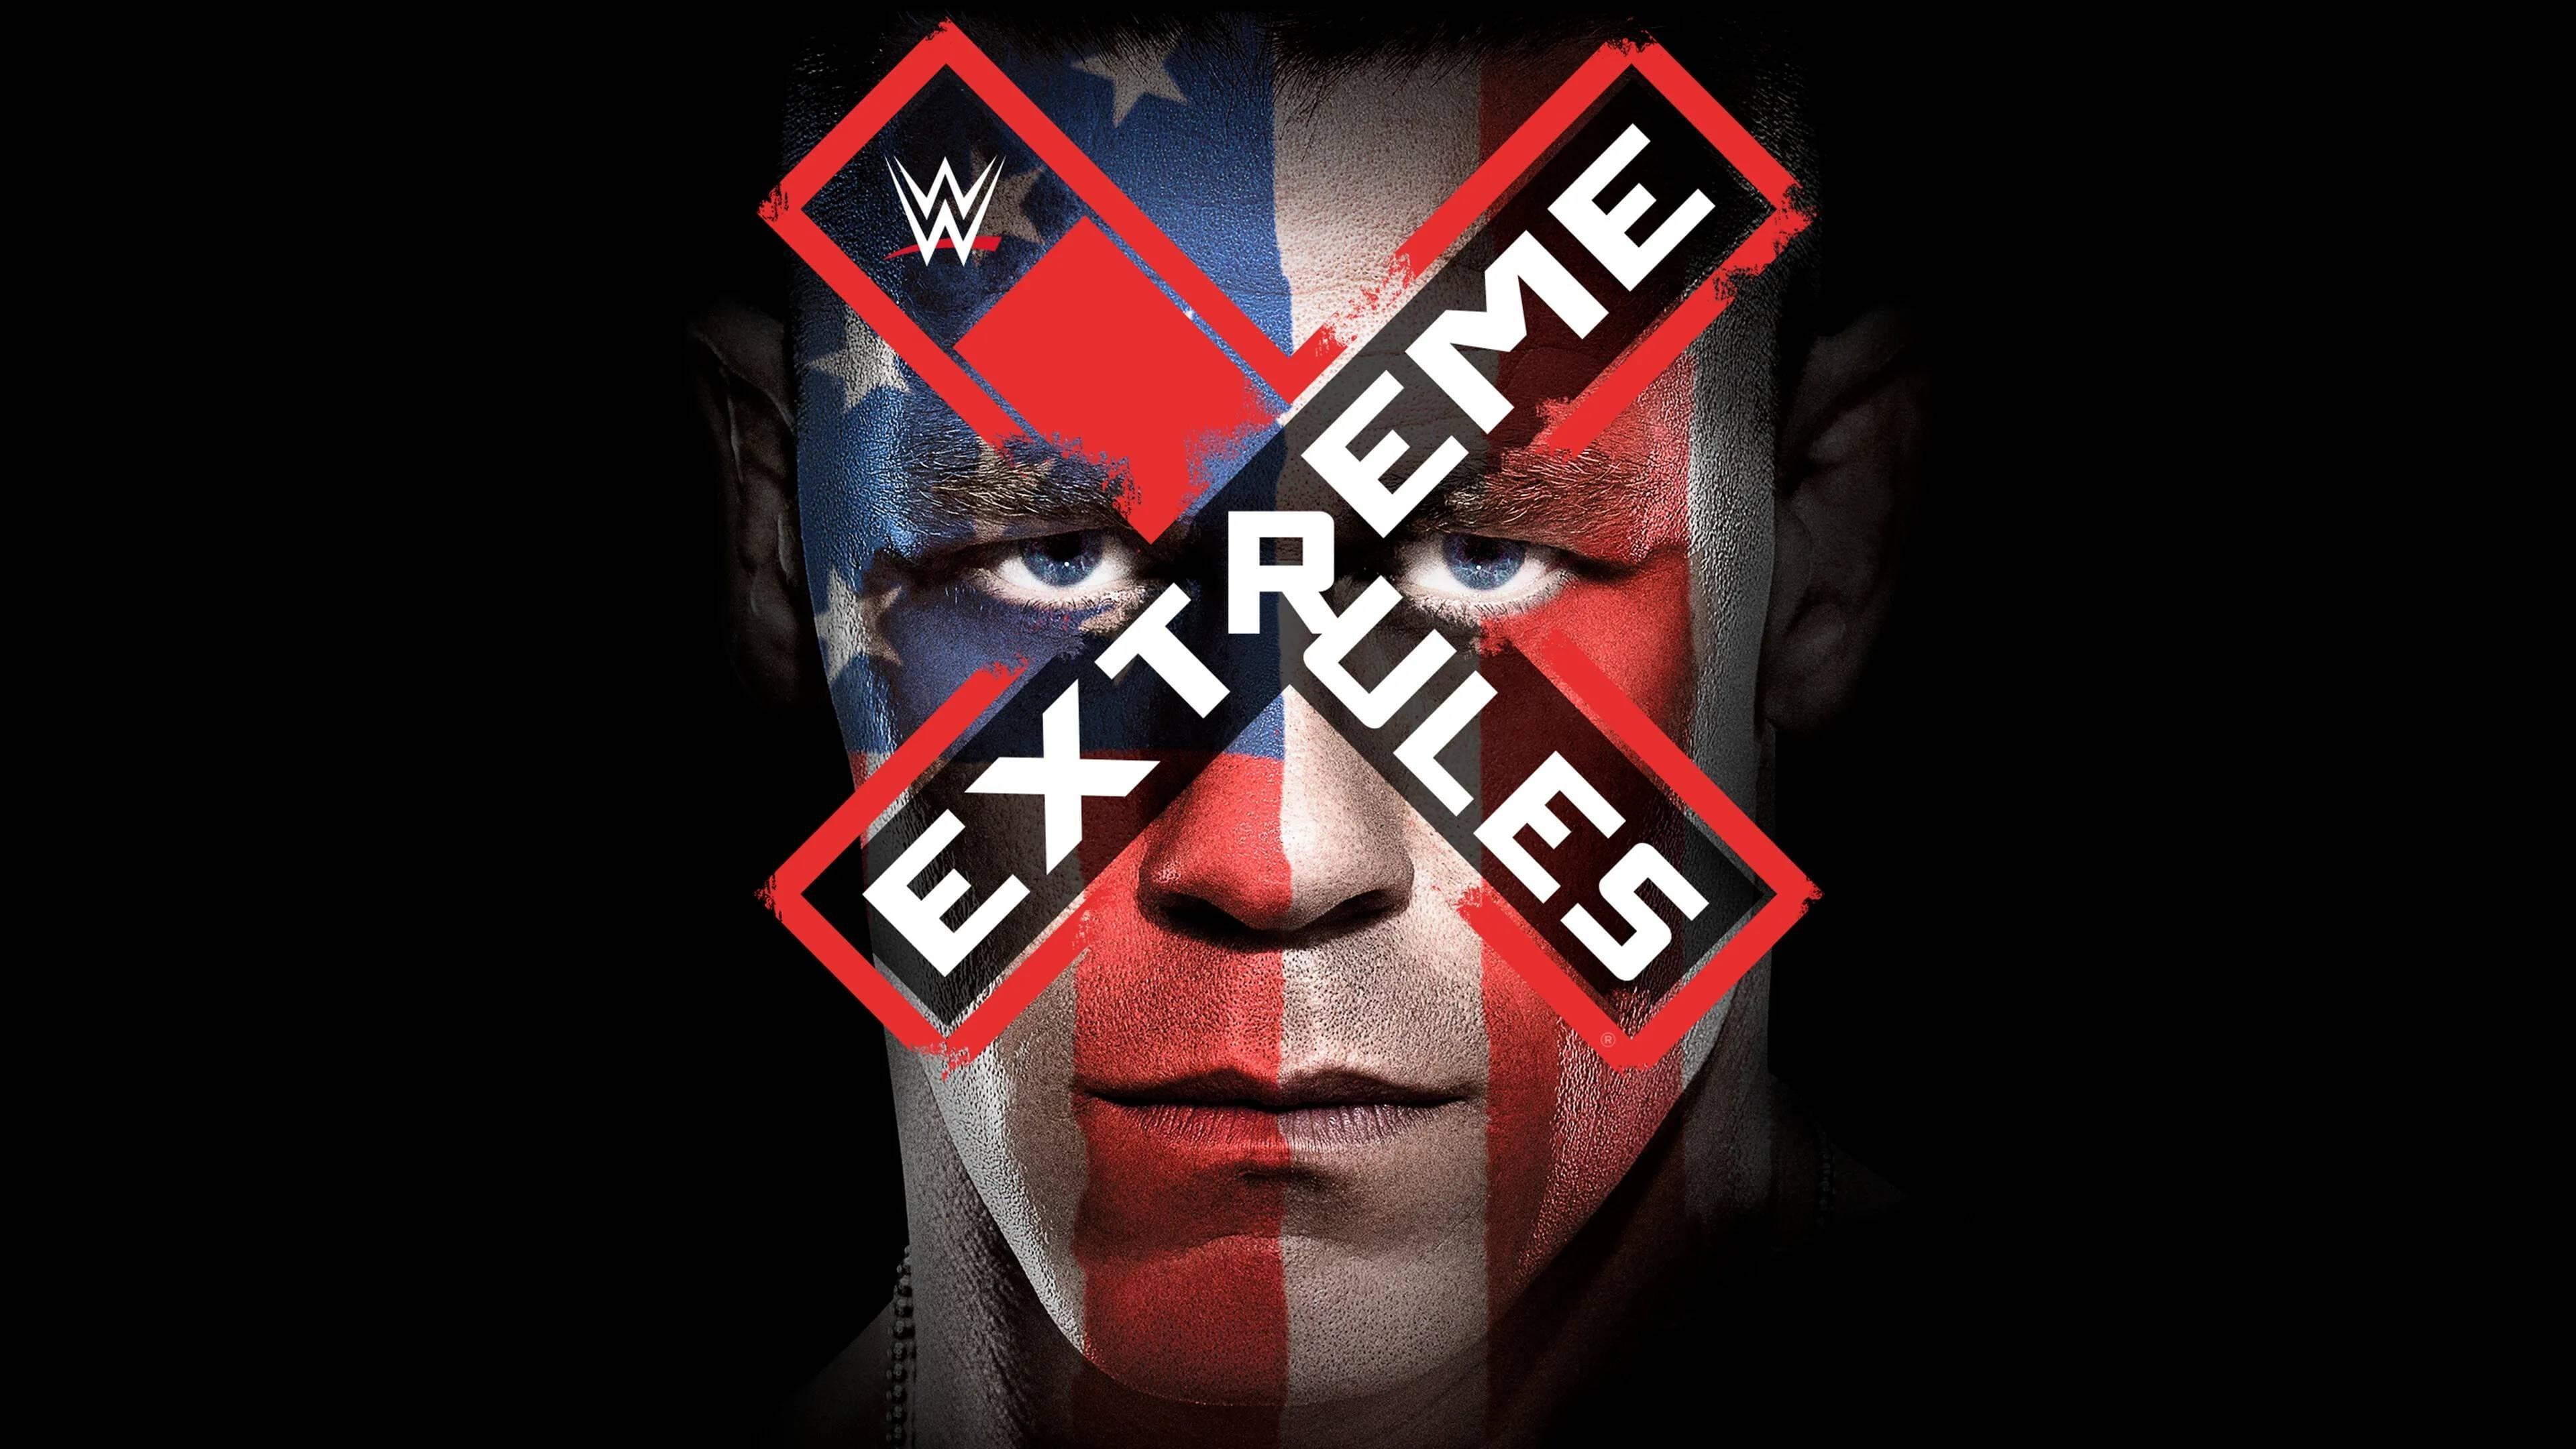 WWE Extreme Rules 2015 backdrop